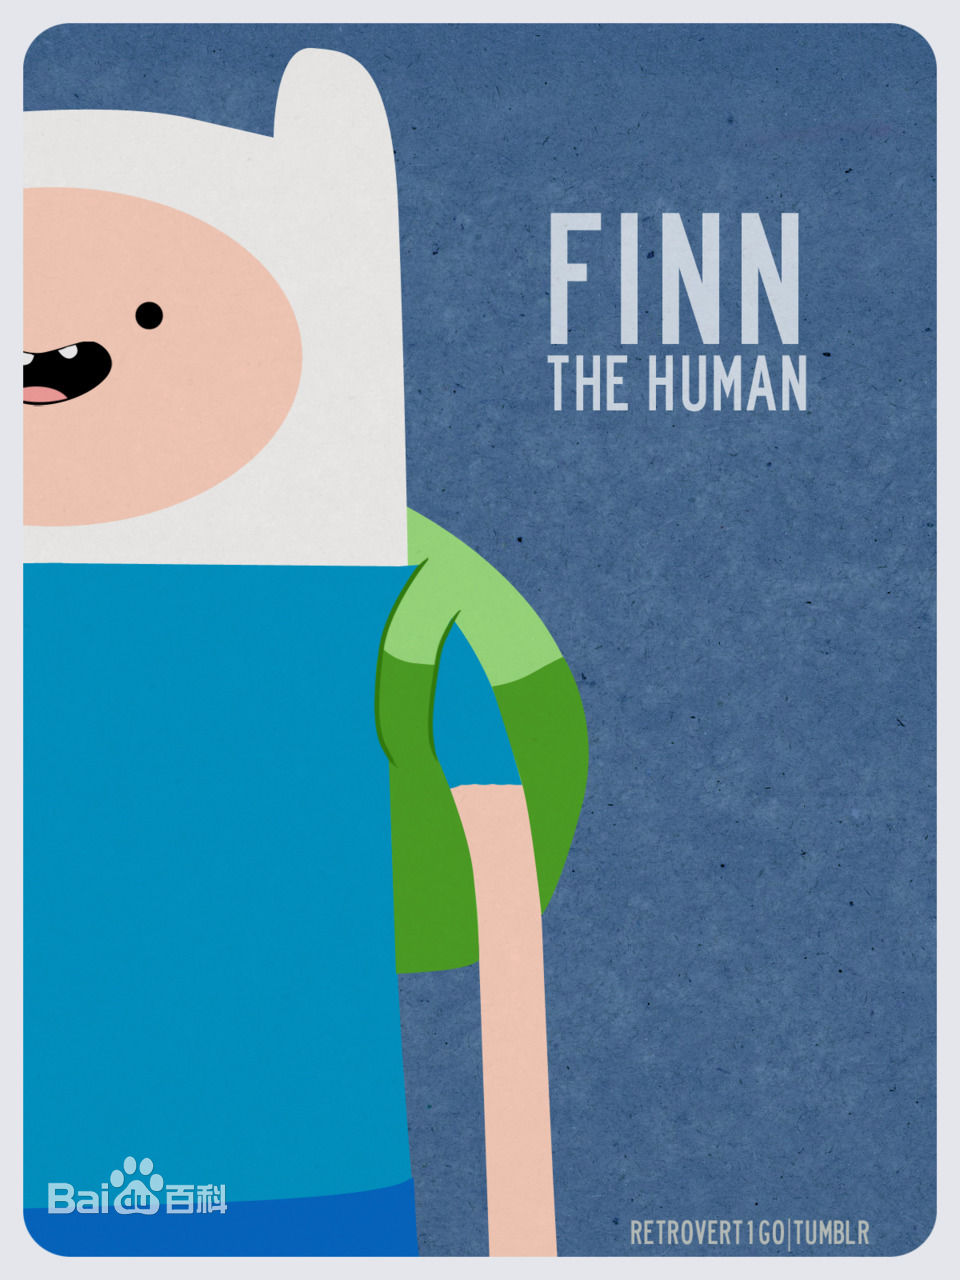 Finn(美國系列動畫《Adventure Time》中的角色)